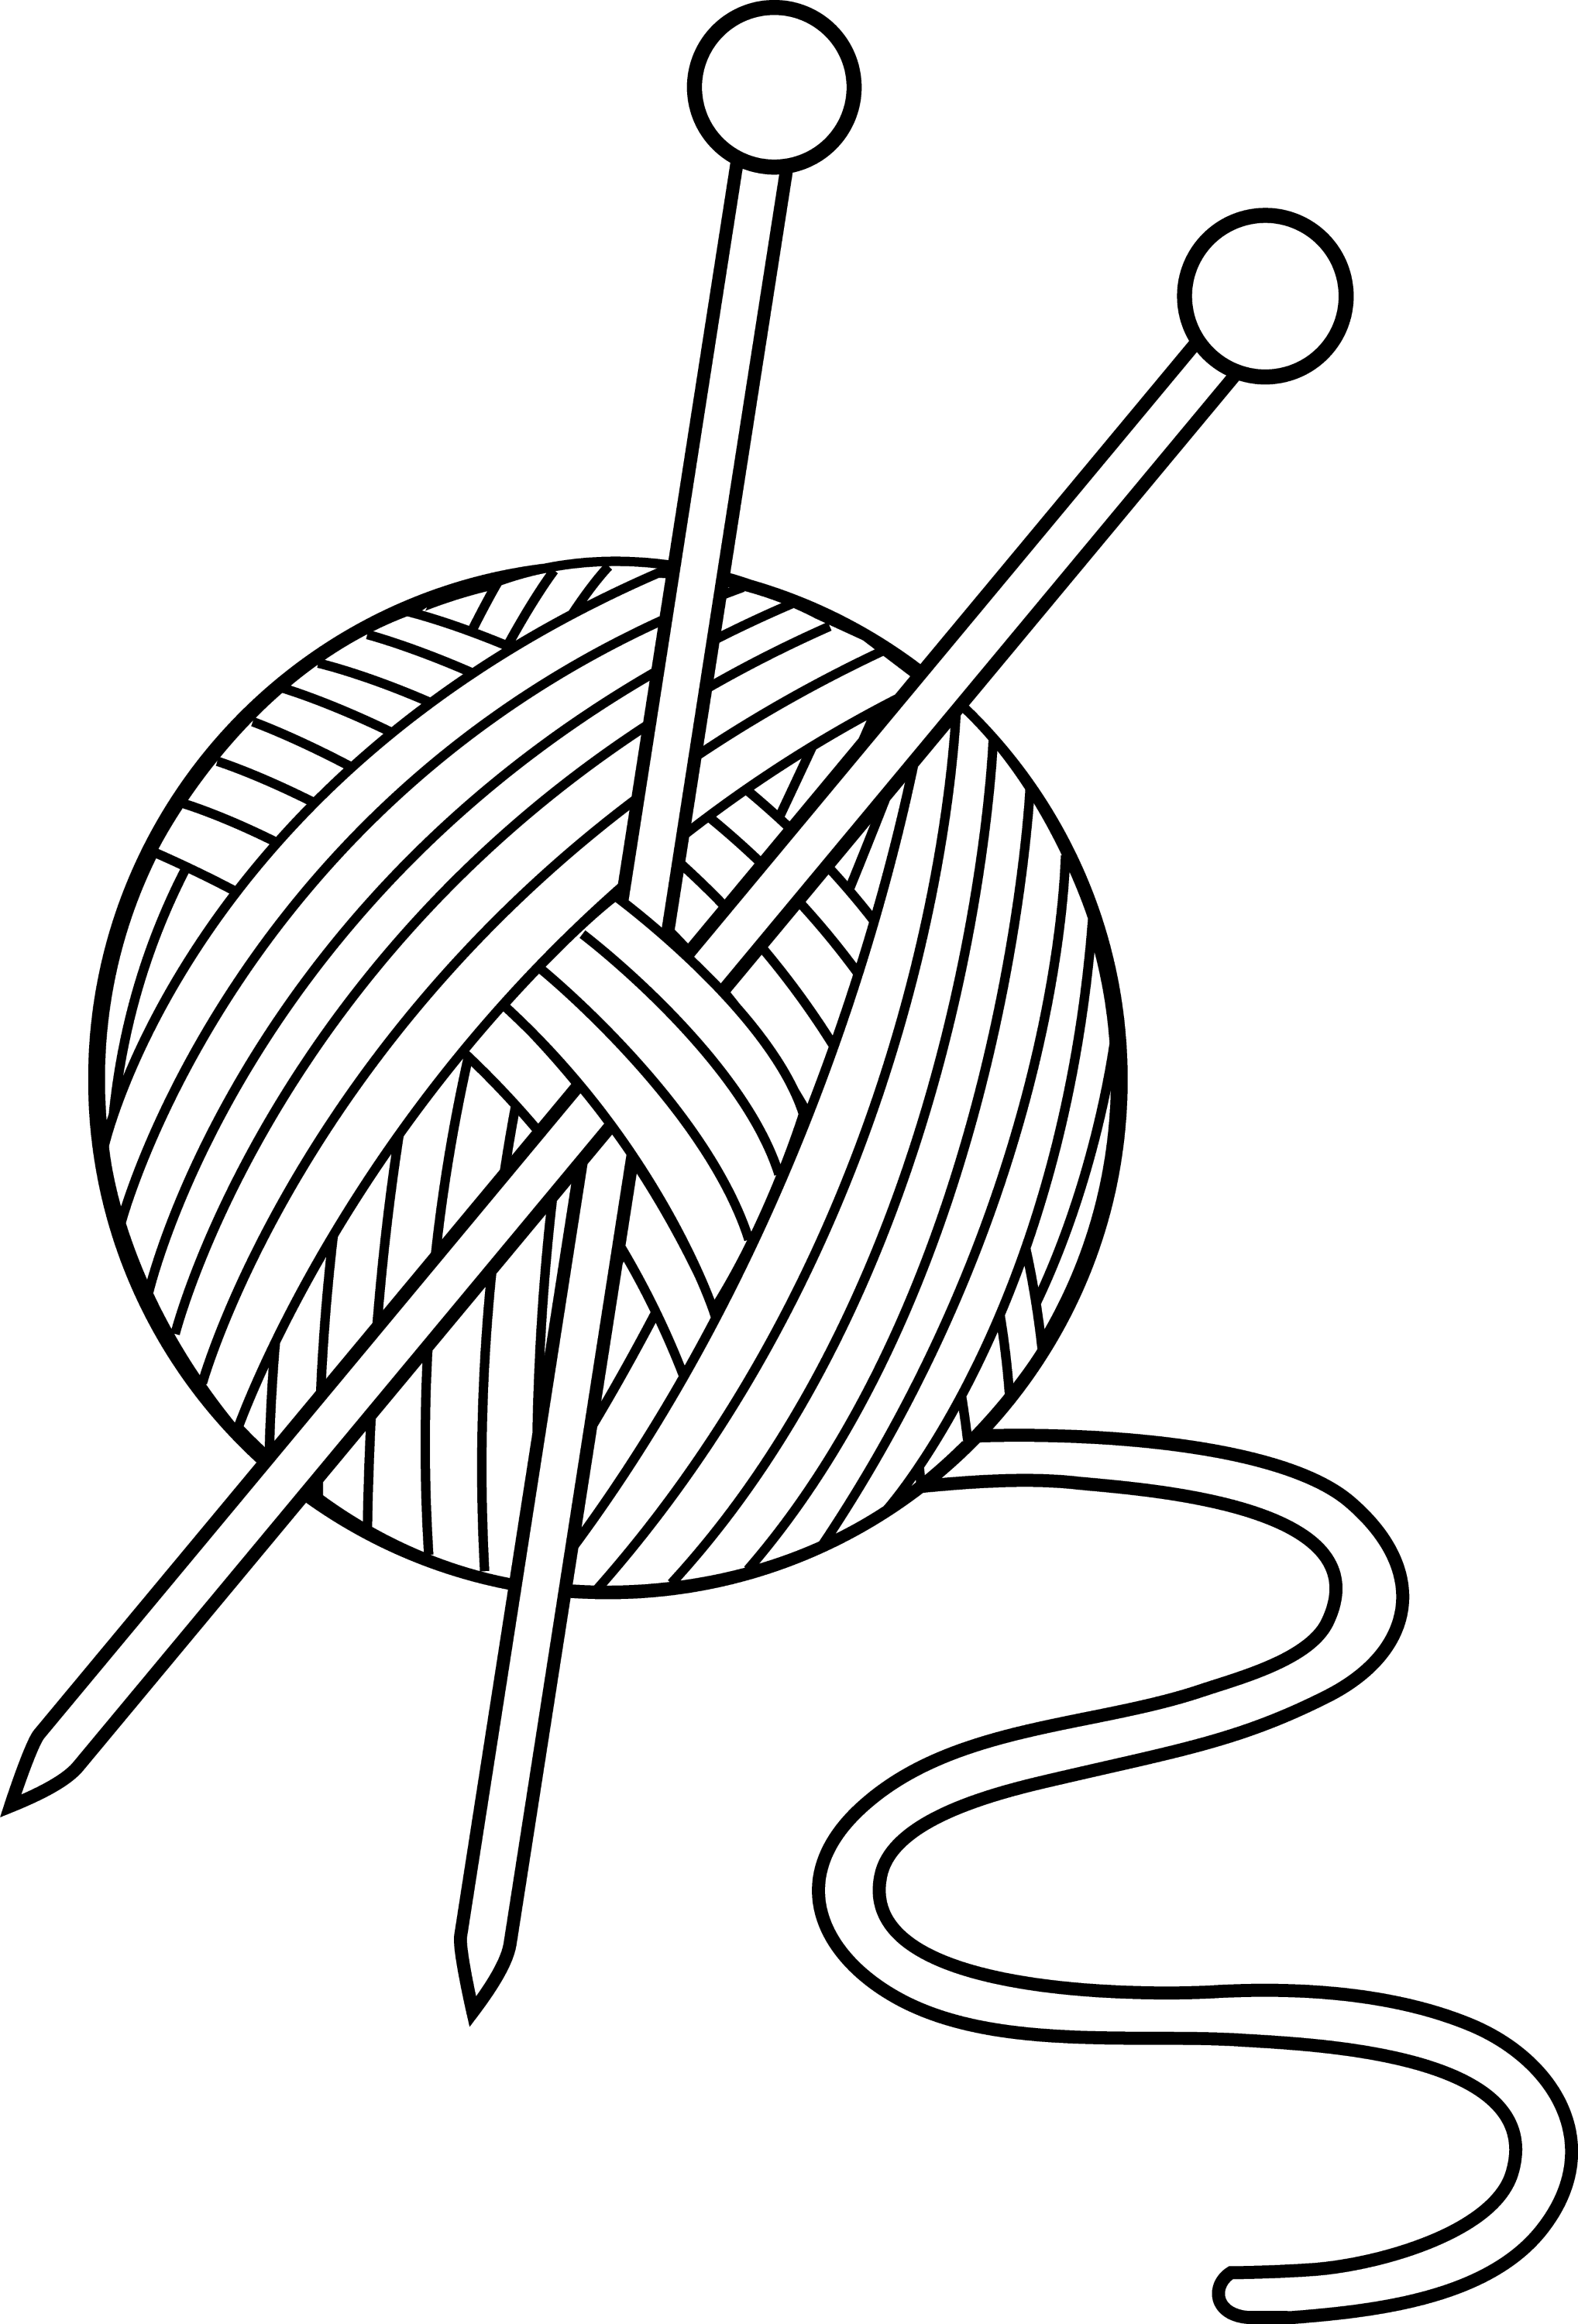 knitting needles and yarn clip art - photo #3